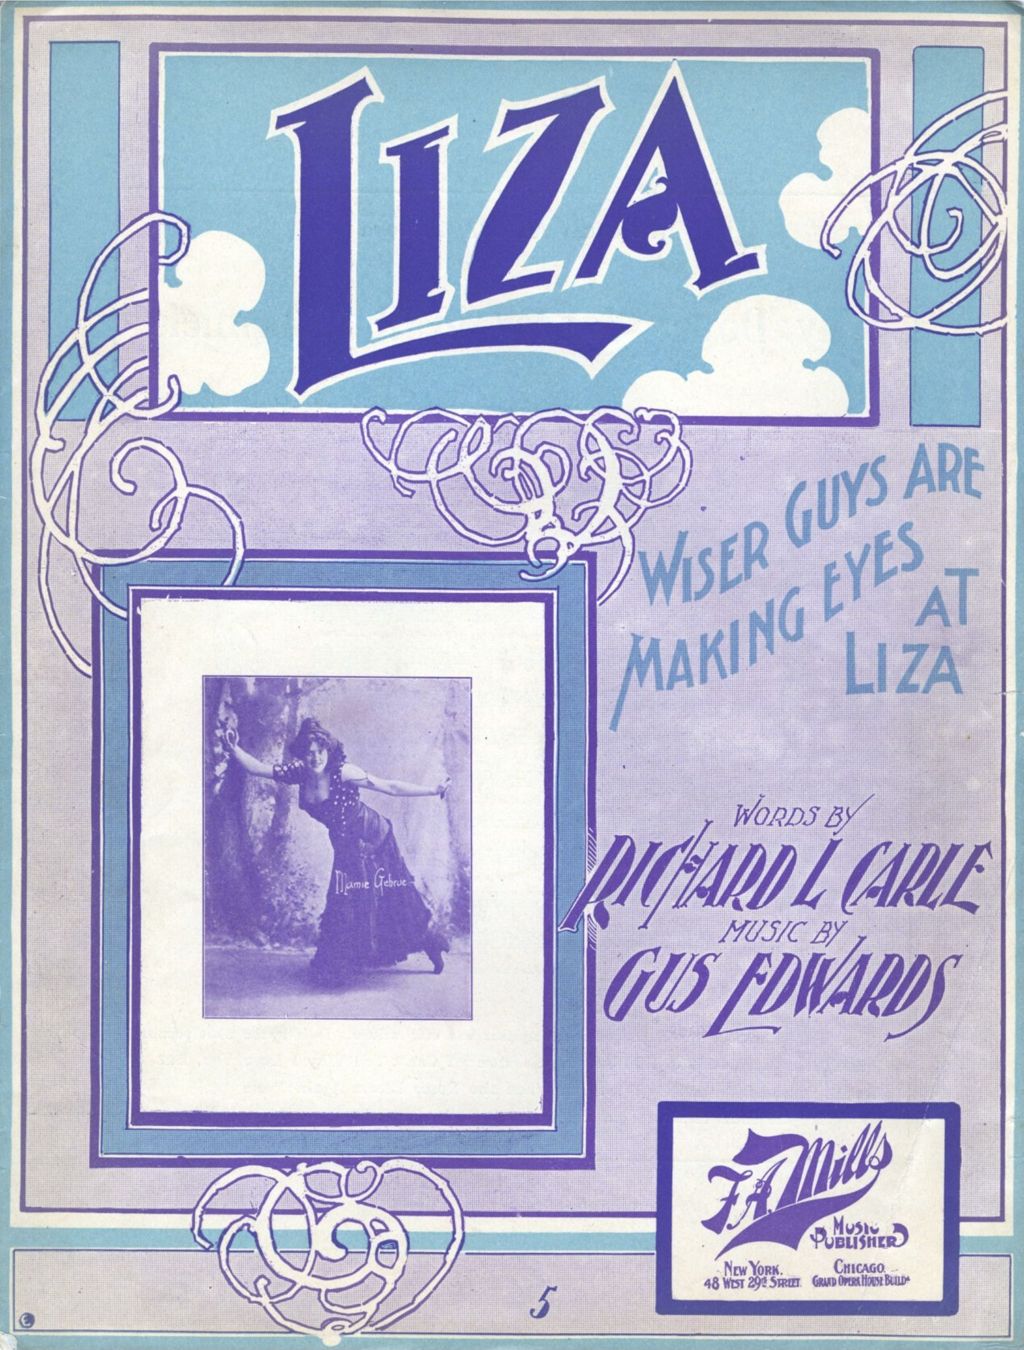 Miniature of Liza (Wiser Guys are Making Eyes at Liza)